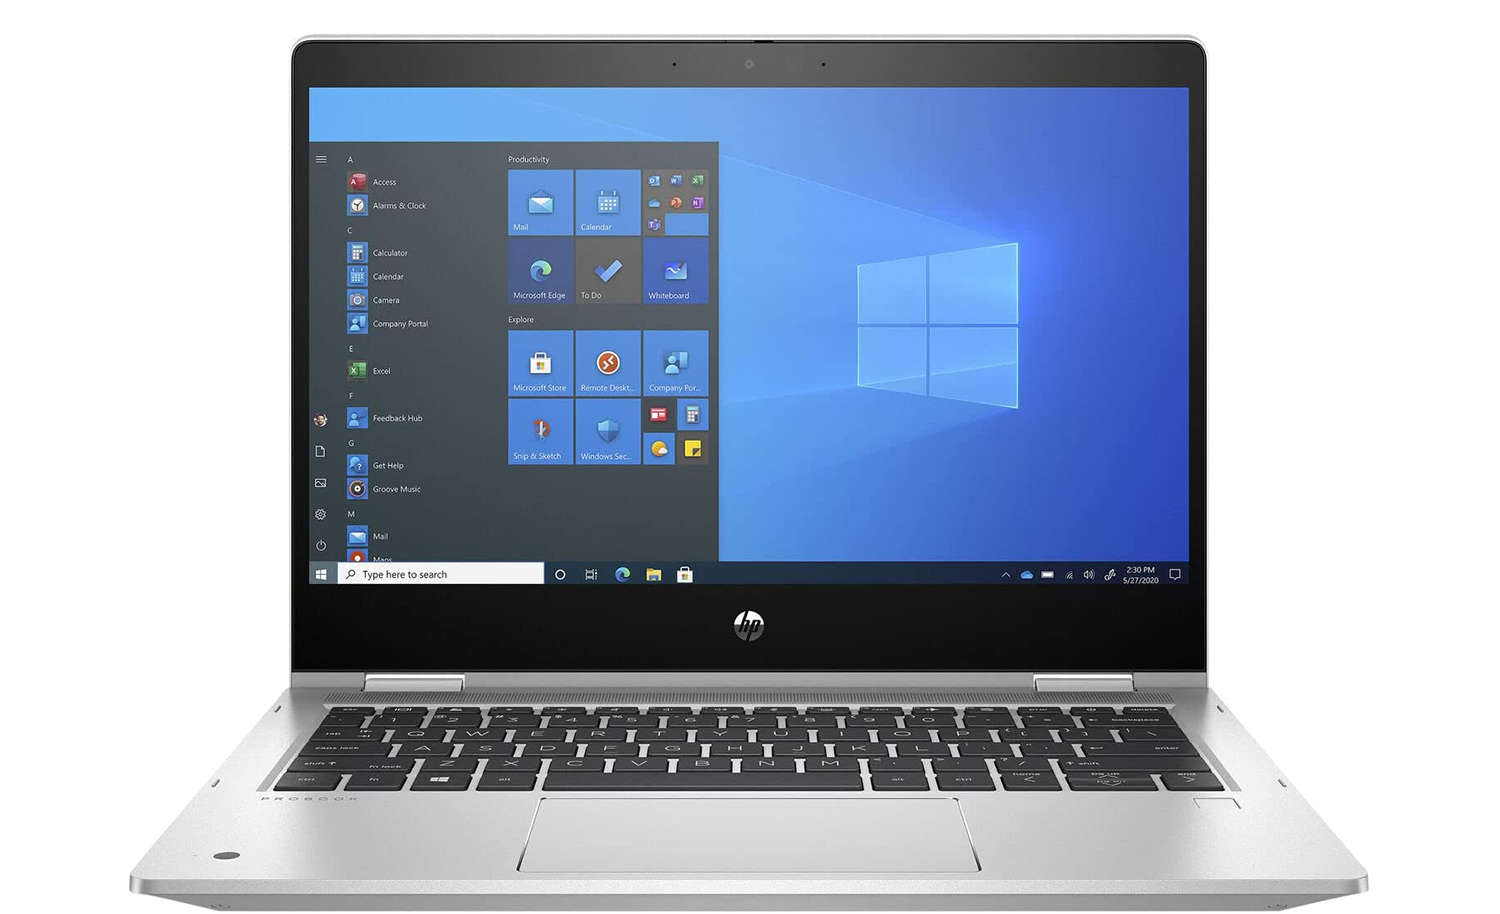 HP ProBook x360 435-G8 AMD Ryzen 3 8GB RAM & 256GB SSD Microsoft Windows 10 Pro